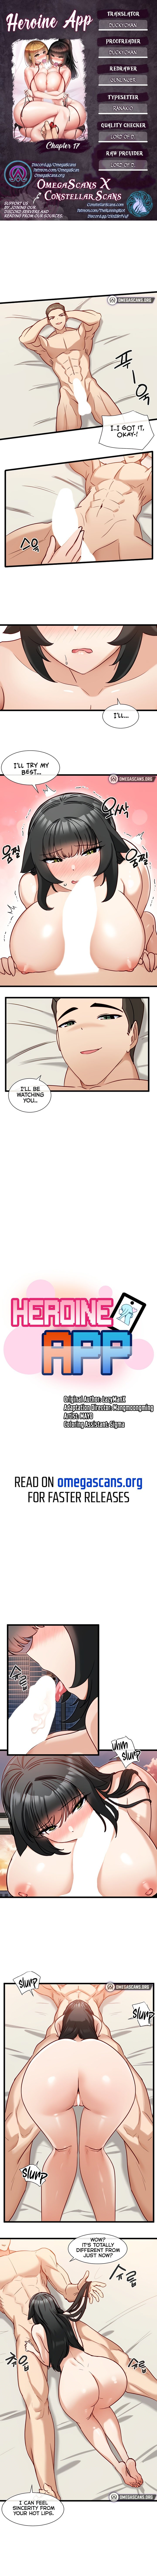 heroine-app-chap-17-0